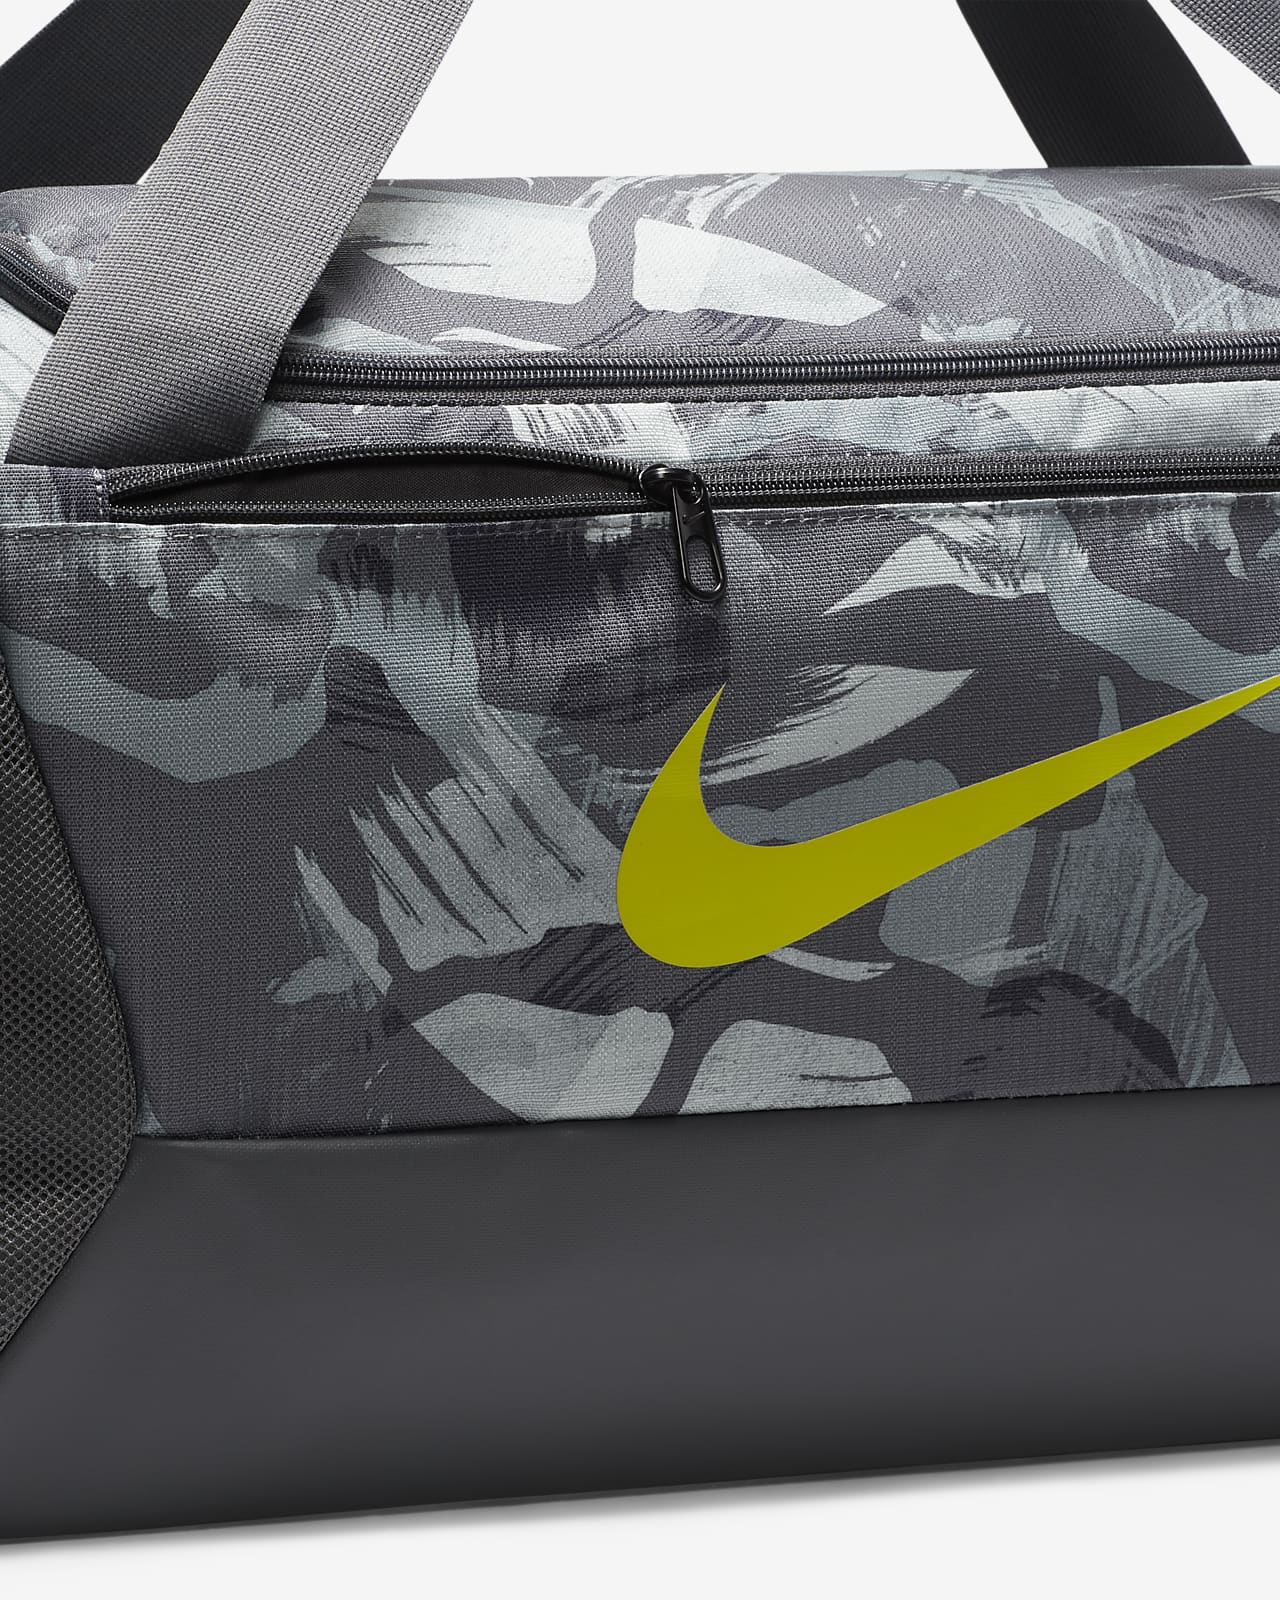 Jual NIKE Unisex Training Brasilia Duffel Bag Small 41L Tas Fitness [DM3976- 381] di Seller Nike Sports Official Store - Gudang Blibli